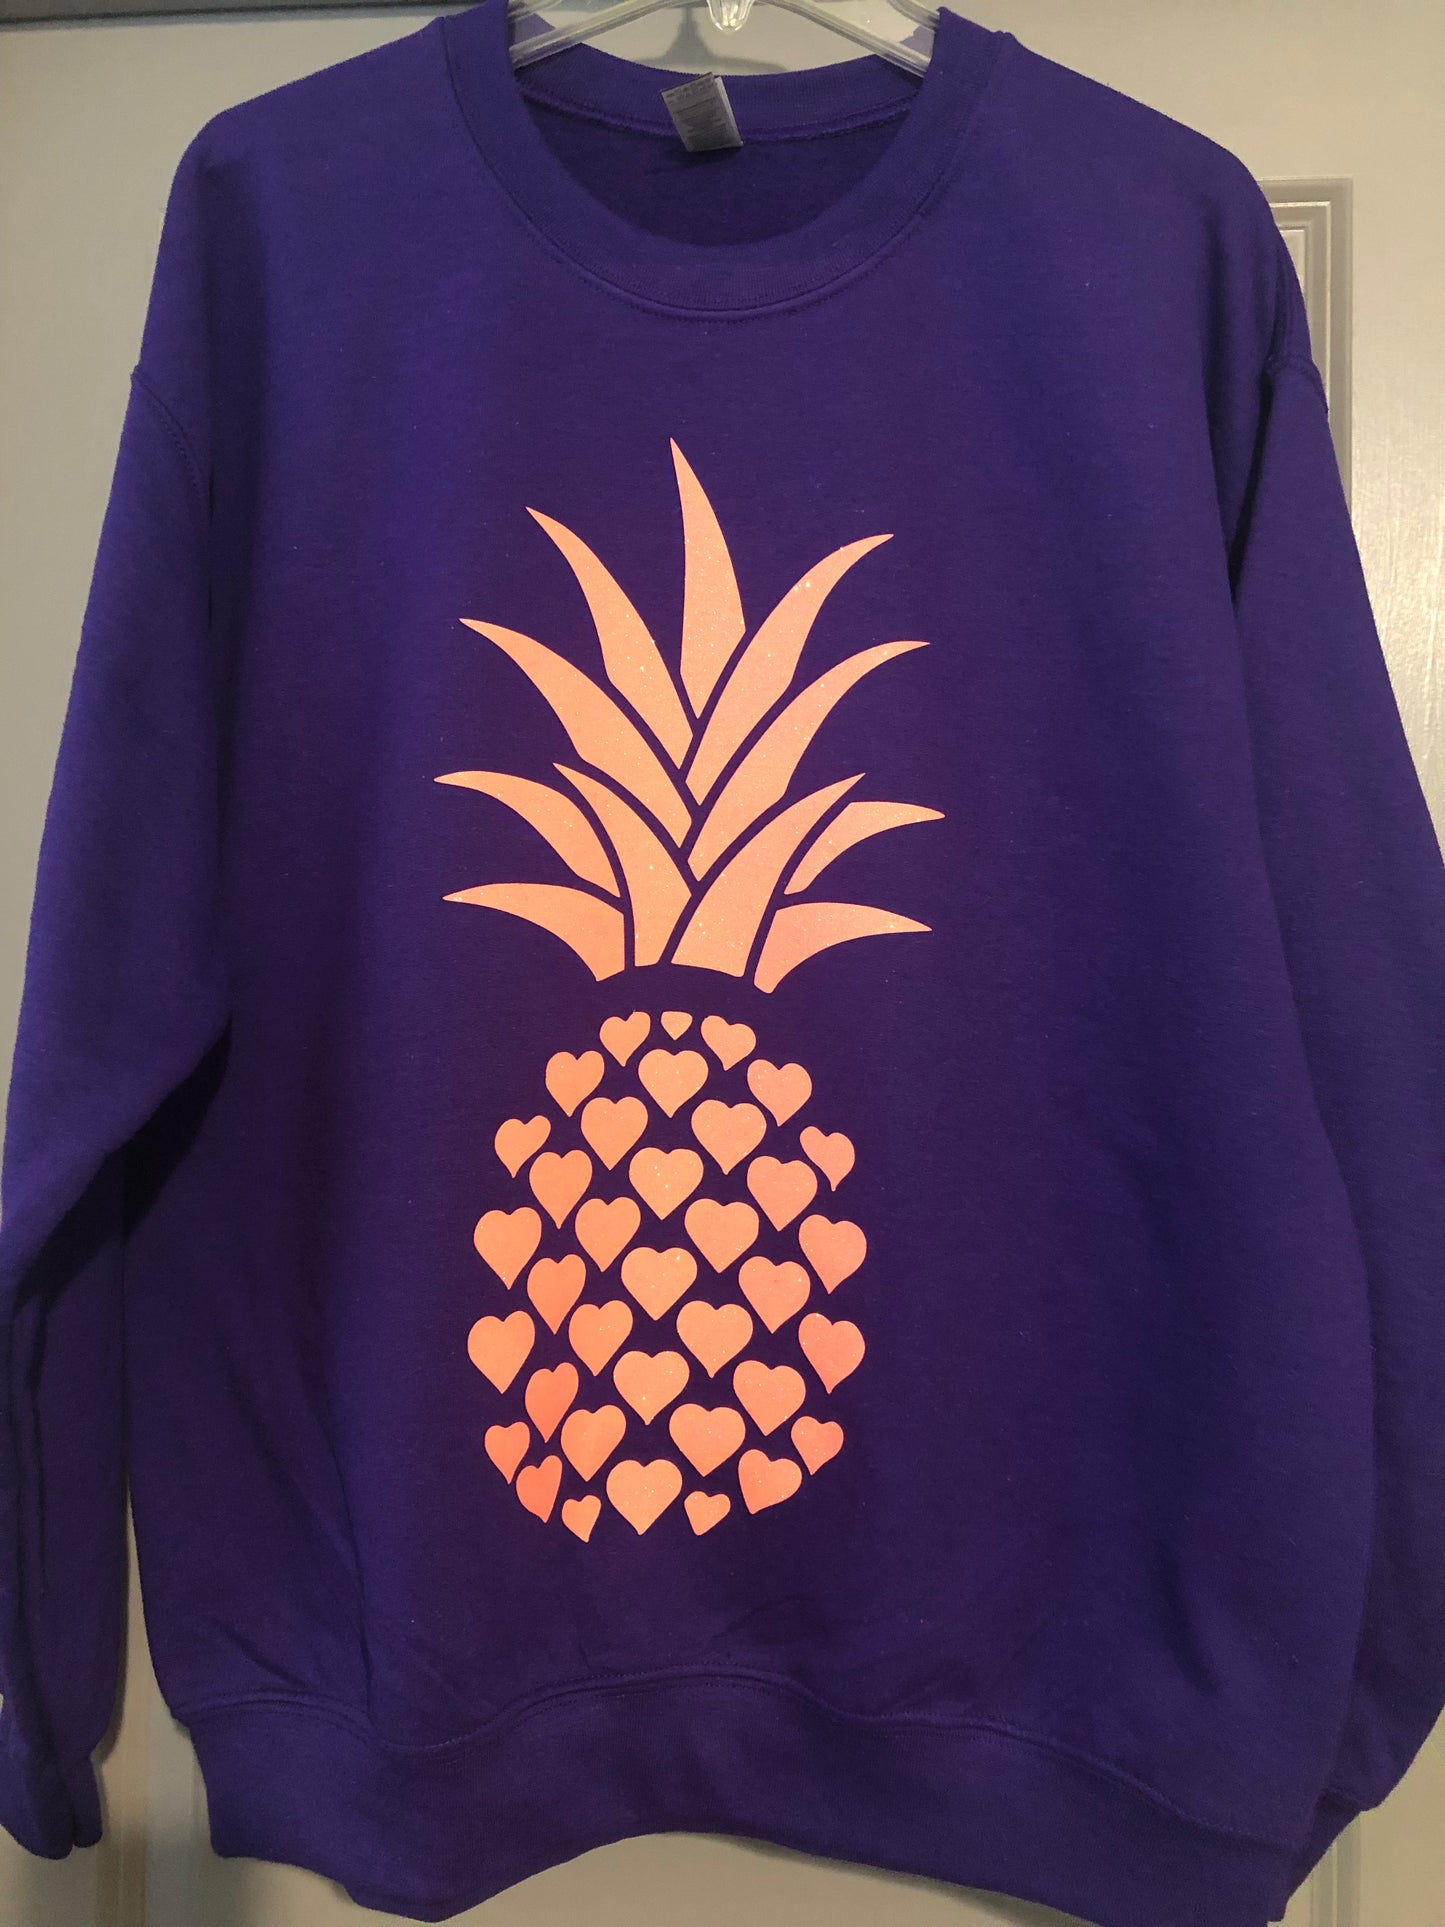 Coral Pineapple Print on Purple Sweater